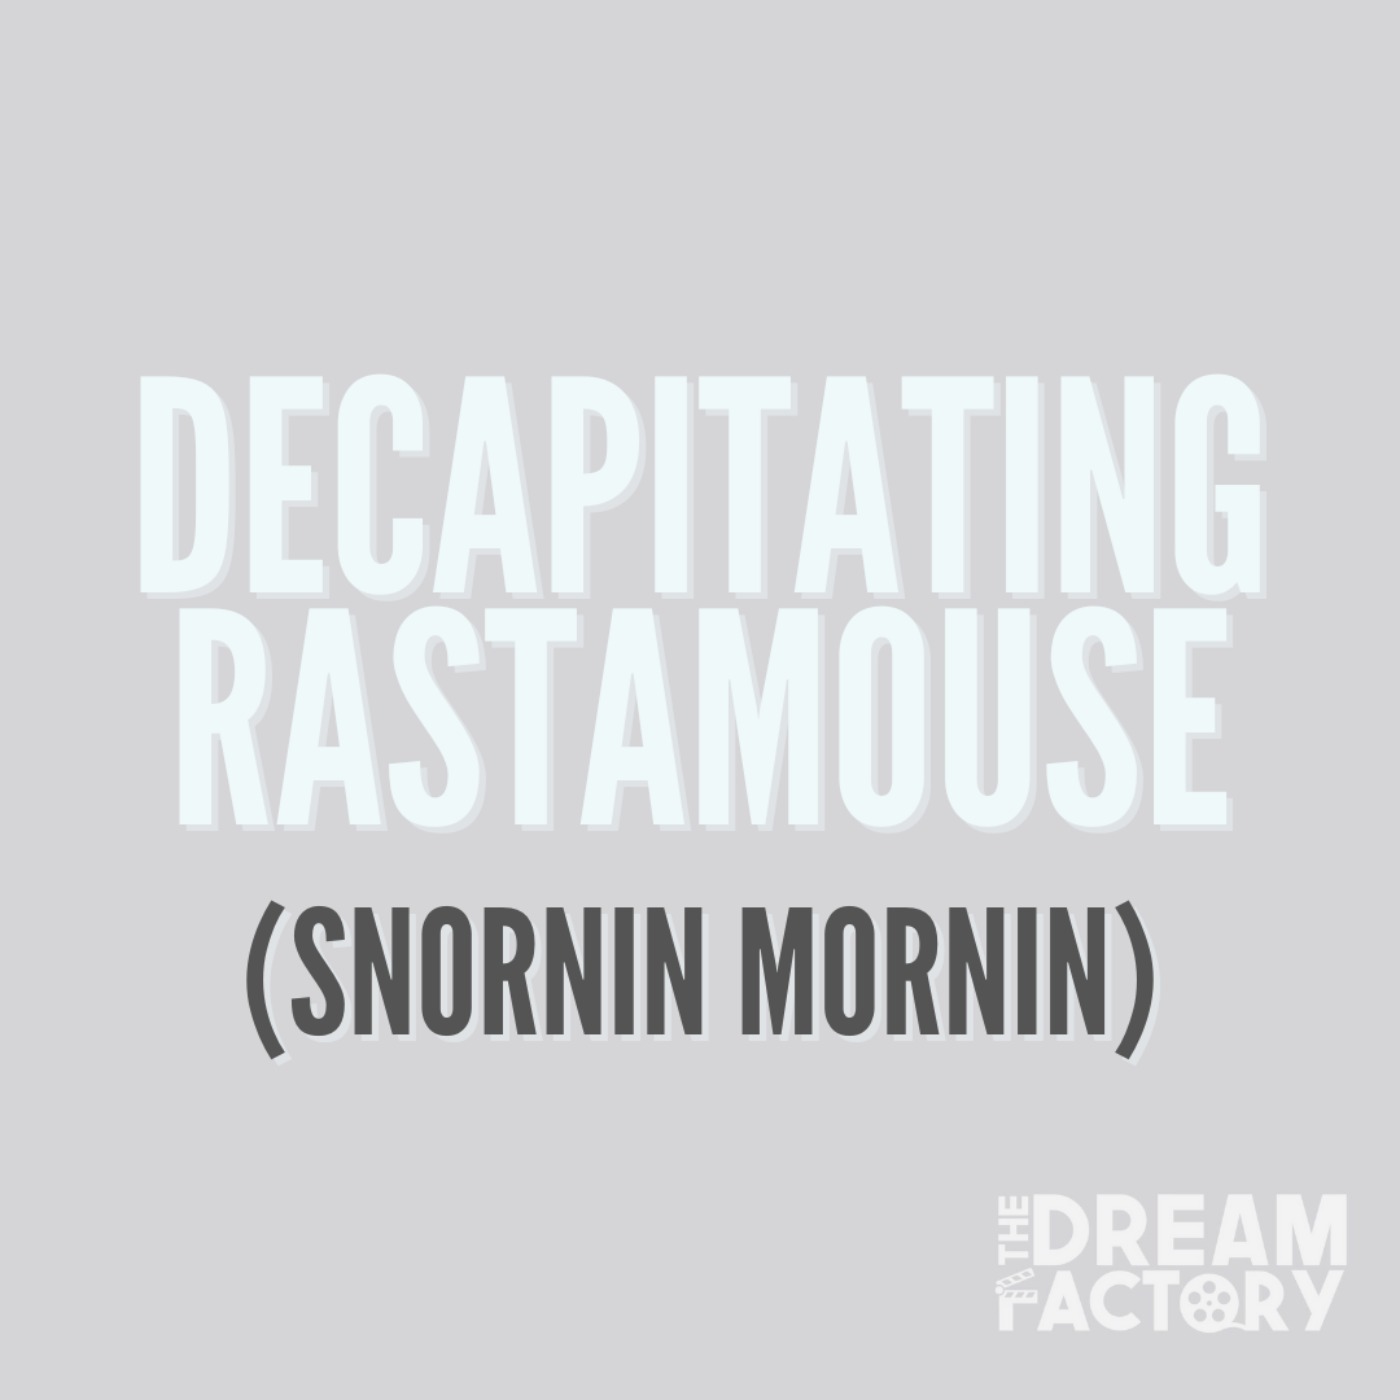 Decapitating Rastamouse (Snornin Mornin)